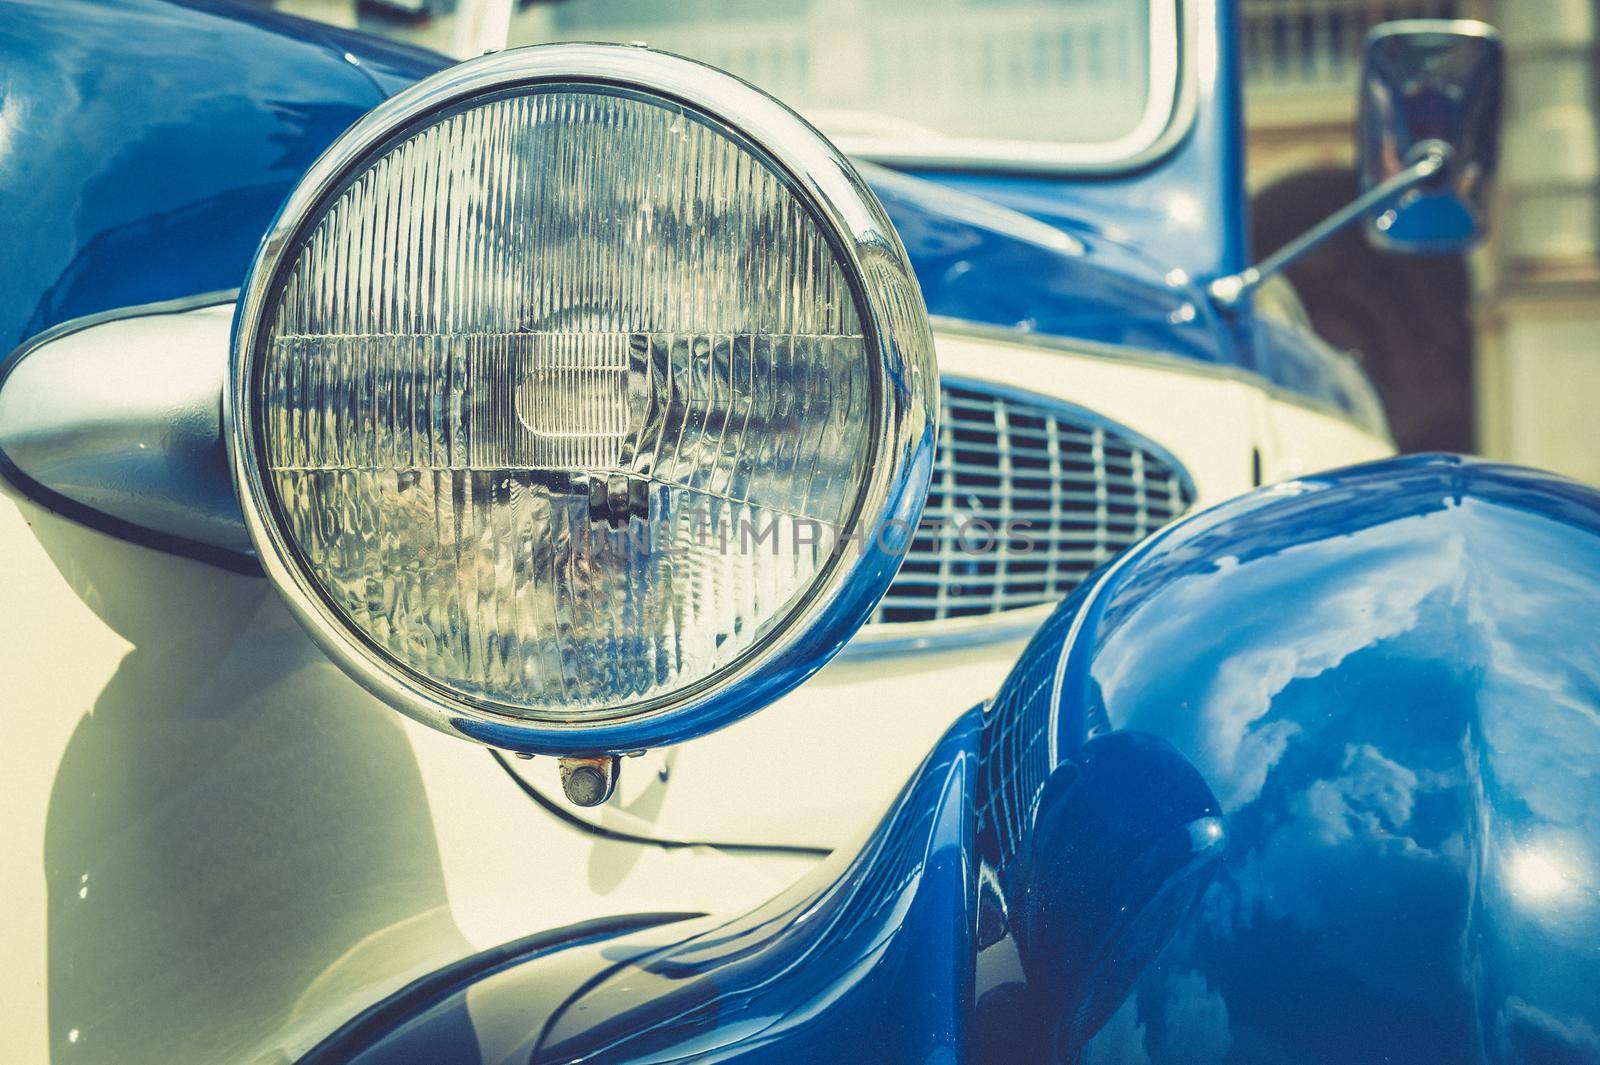 Headlight of a vintage car by cla78